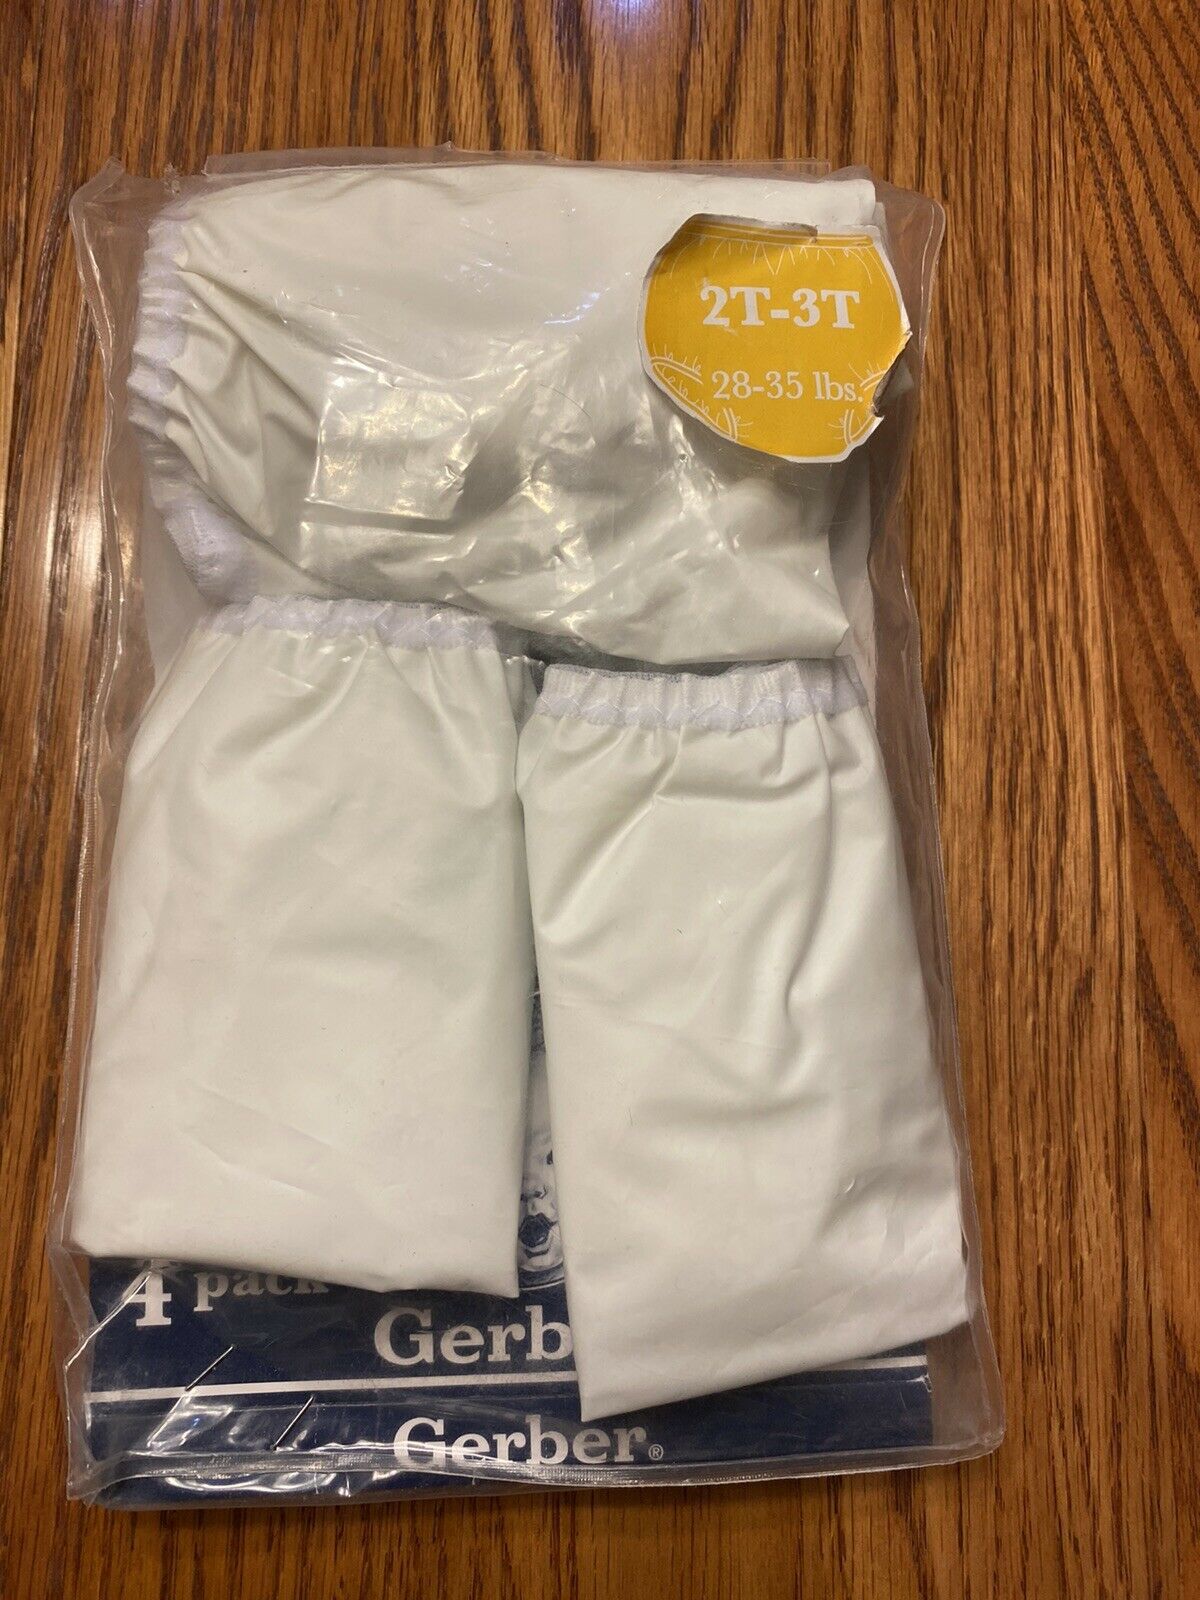 Gerber Waterproof Pants 3 Count 2t-3t 28-35lbs